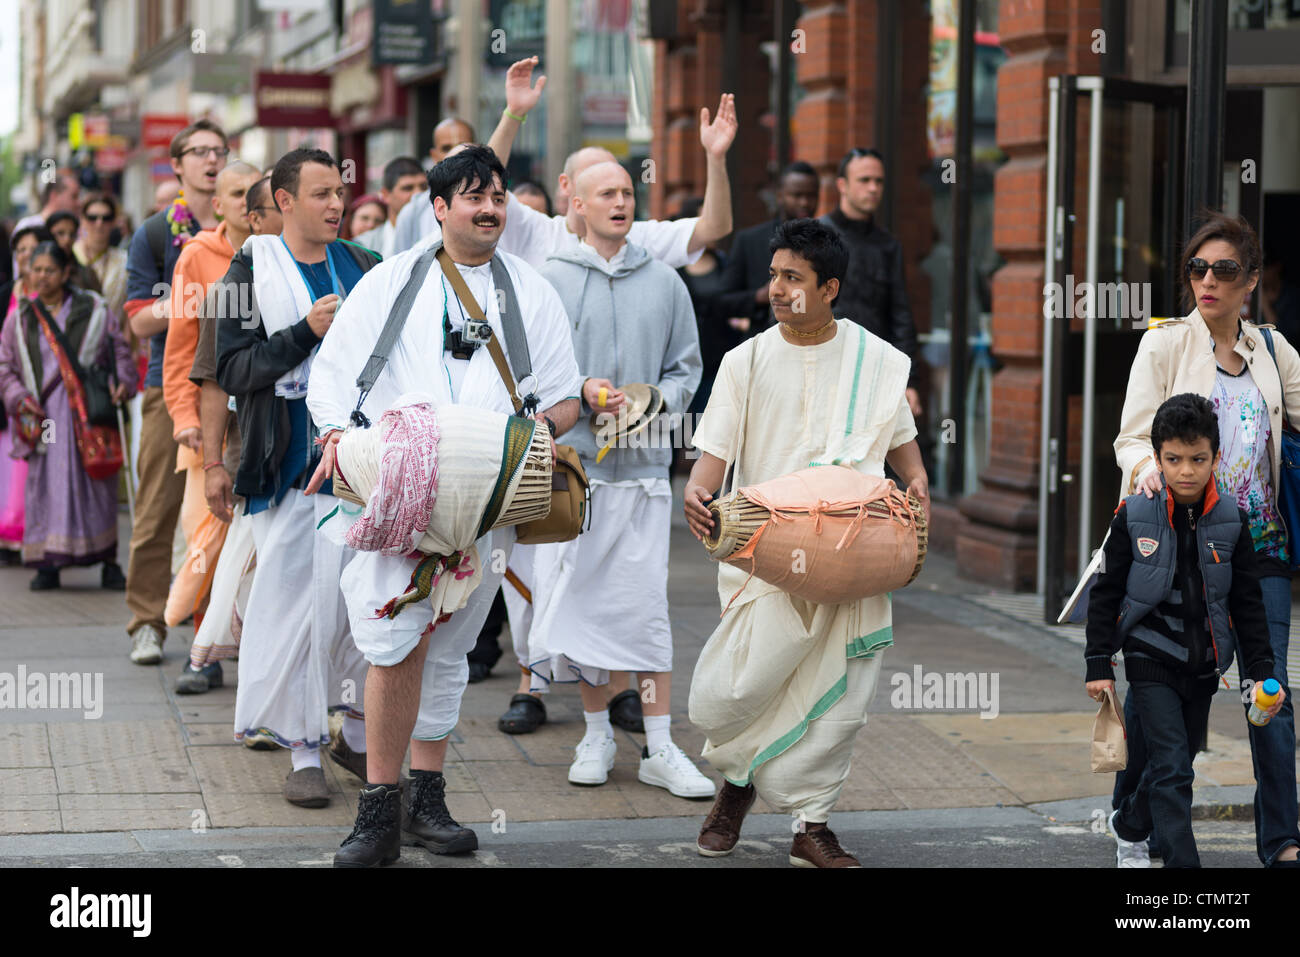 A band of Hare Krishna followers in Oxford street, London. Stock Photo